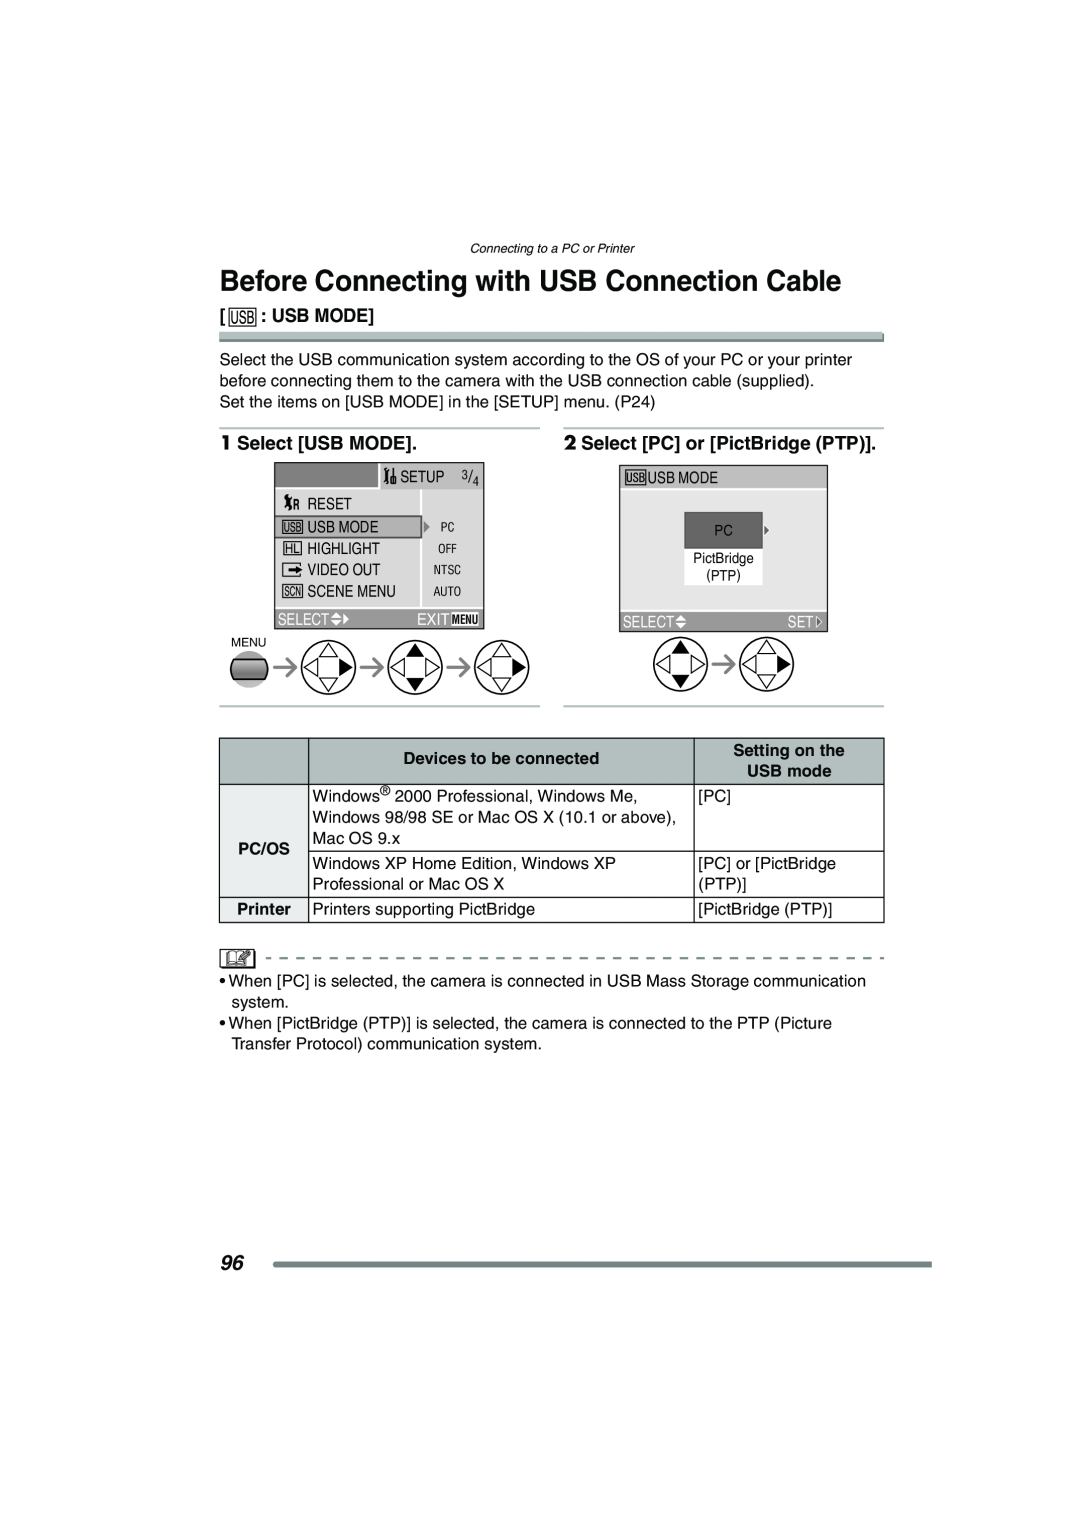 Panasonic DMC-FZ20PP Before Connecting with USB Connection Cable, Usb Mode, Select USB MODE, Select PC or PictBridge PTP 